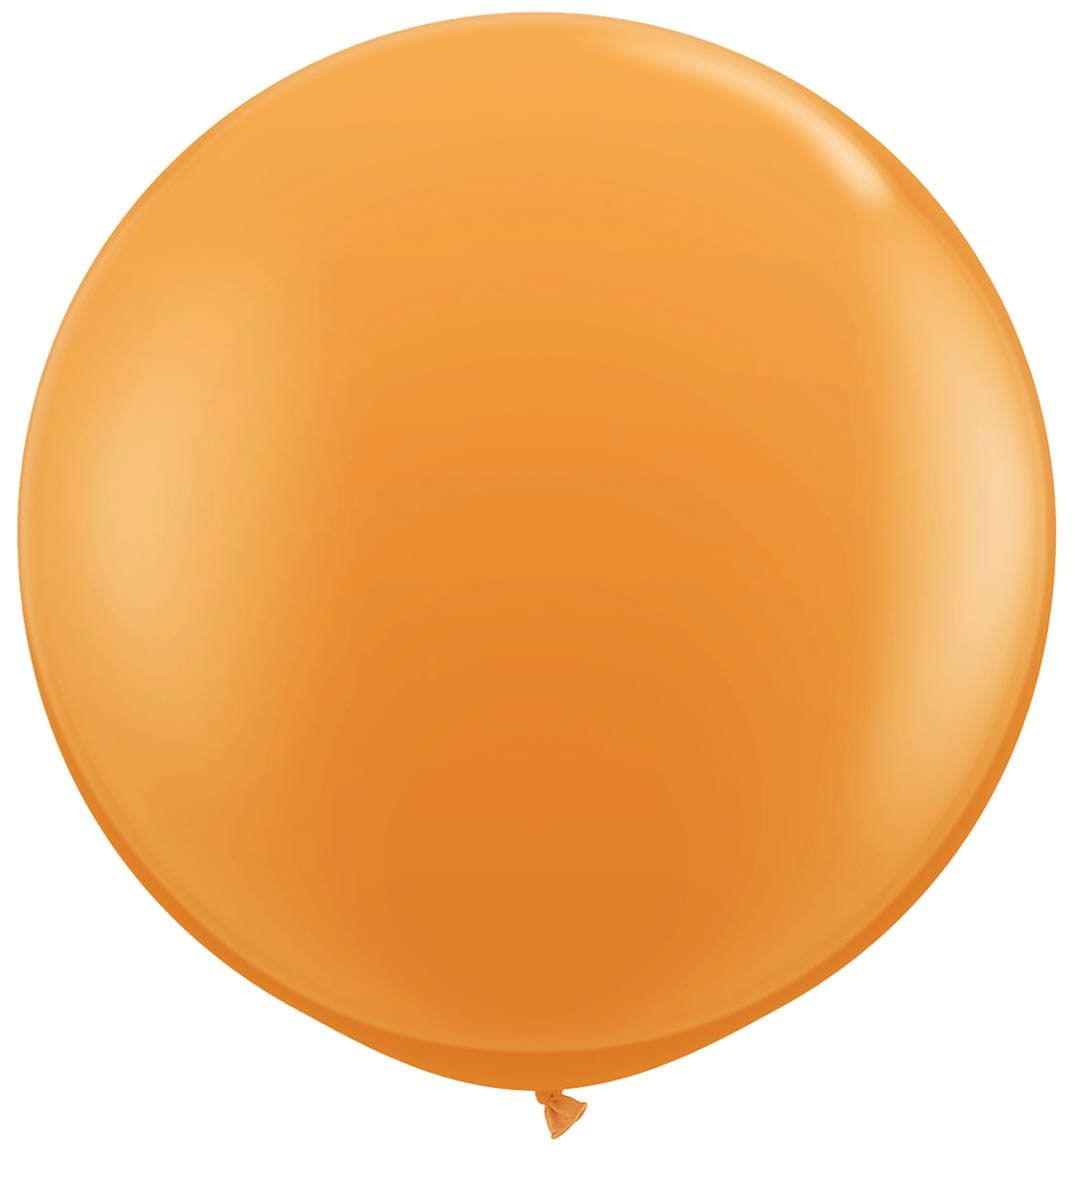 Oranje ballon XL 90cm